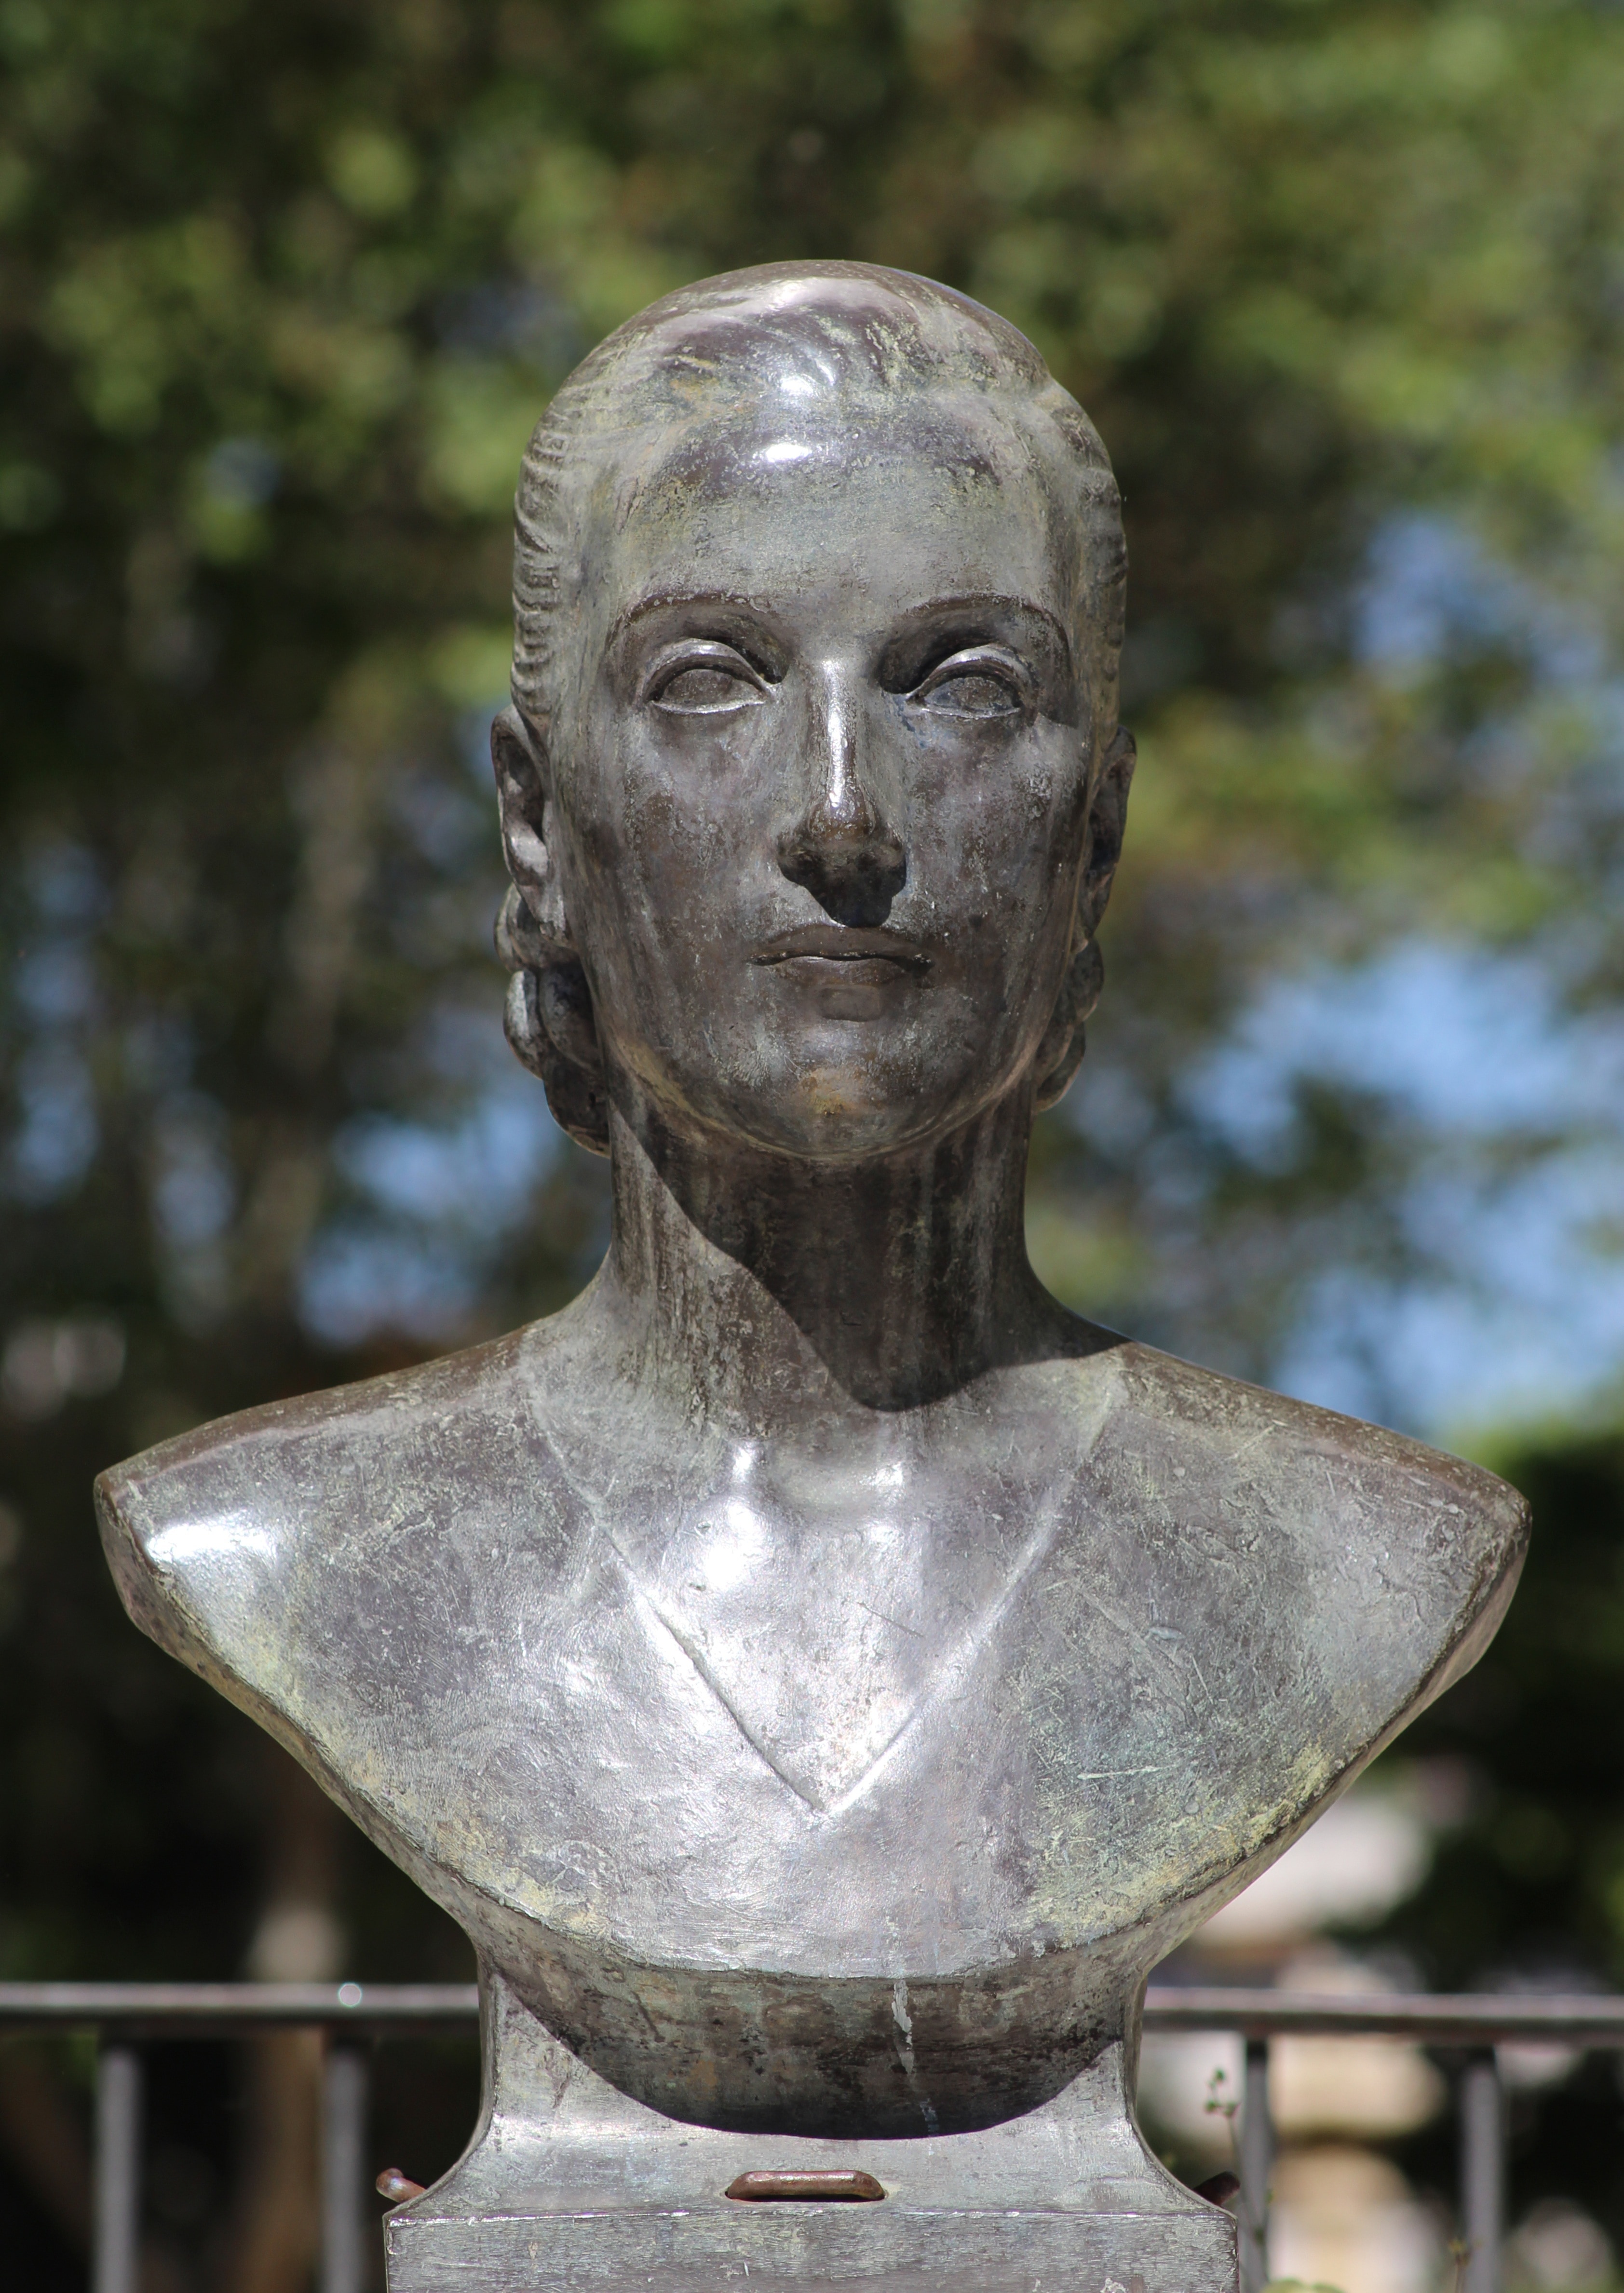 Bust, Bronze, Eva Peron, Sculpture, statue, sculpture